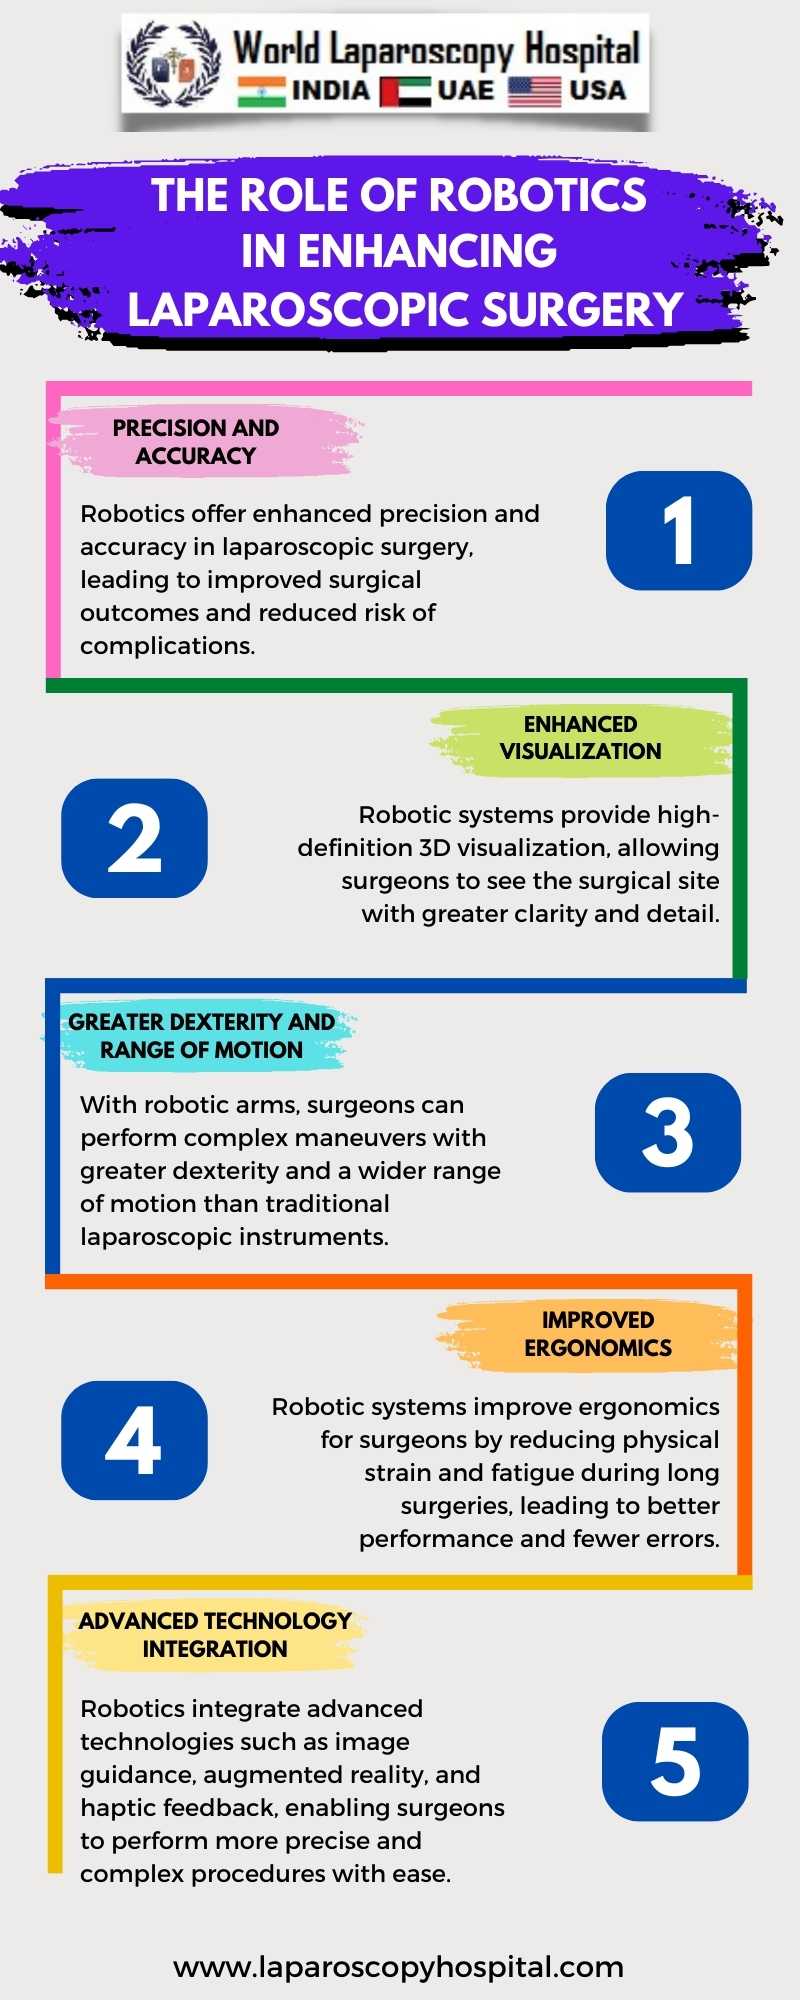 The Role of Robotics in Enhancing Laparoscopic Surgery